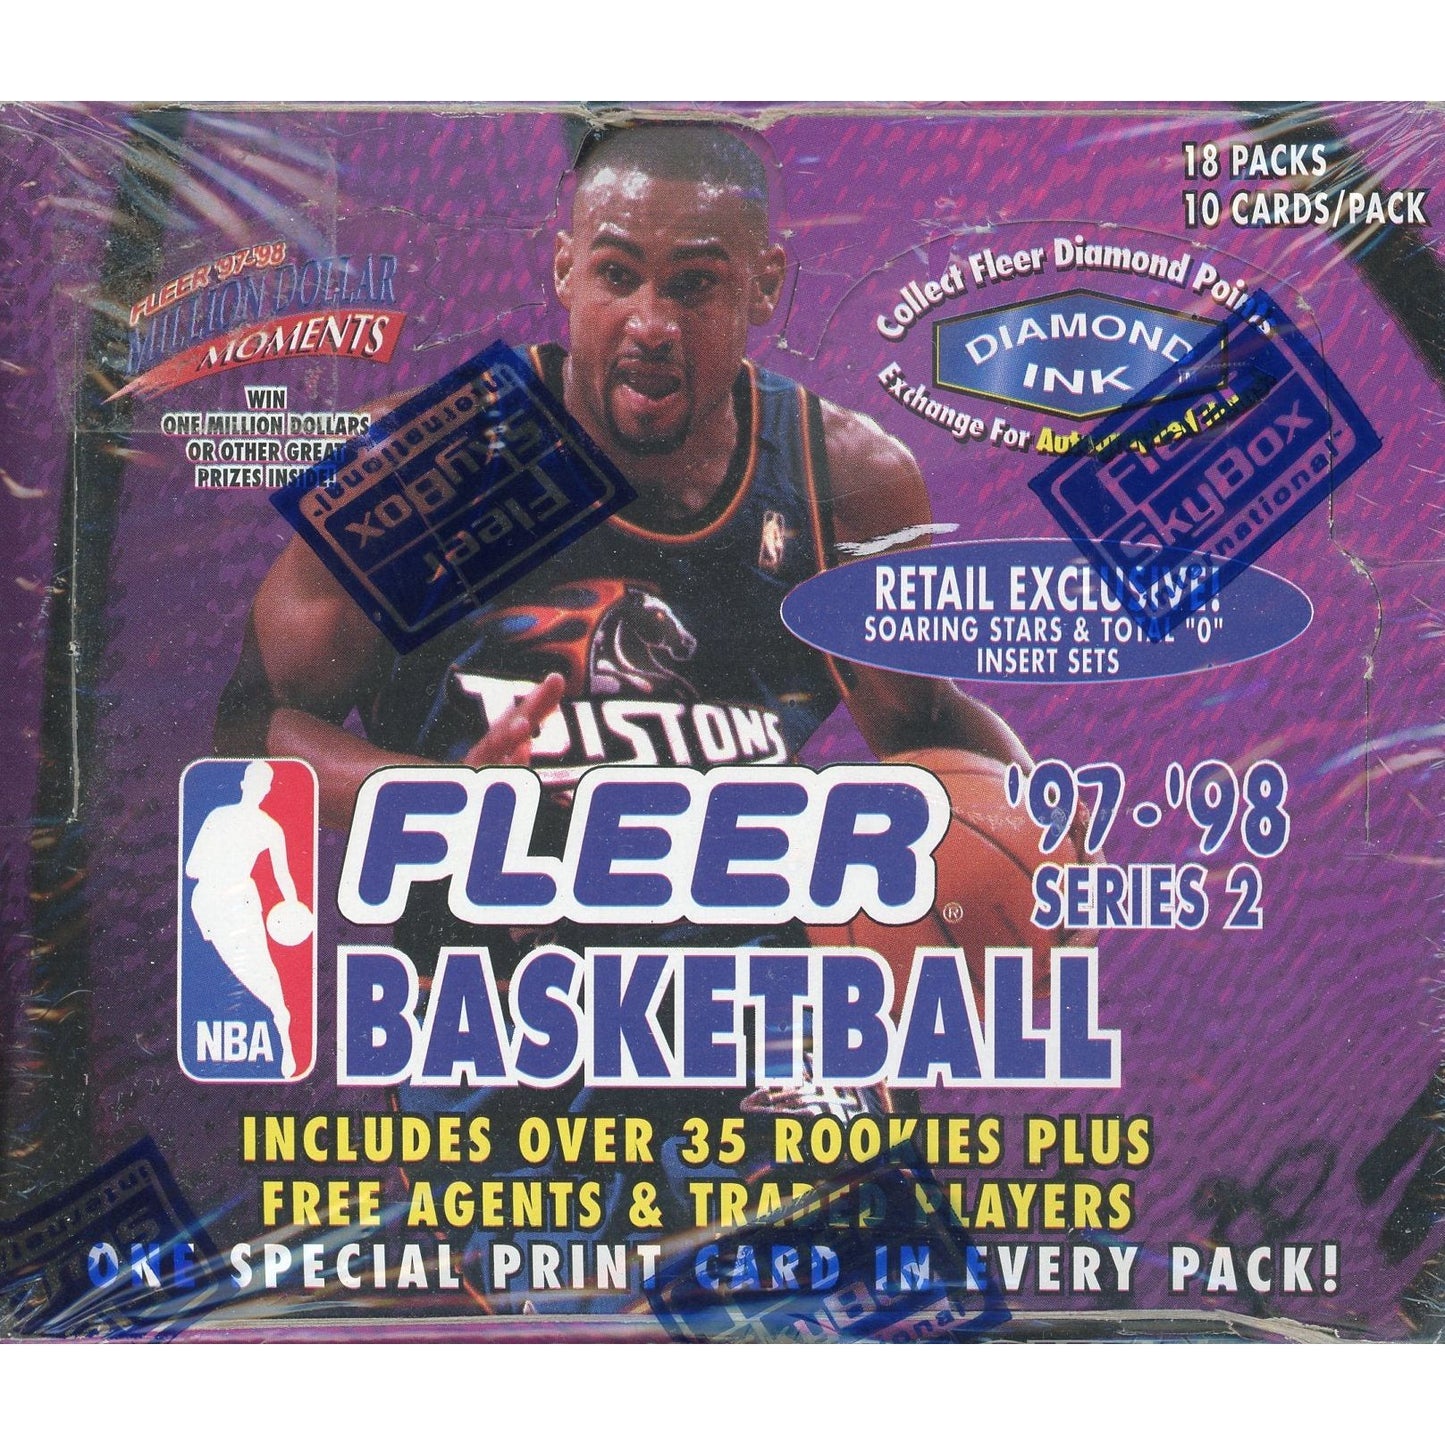 1997-98 Fleer Basketball Series 2 Retail Box